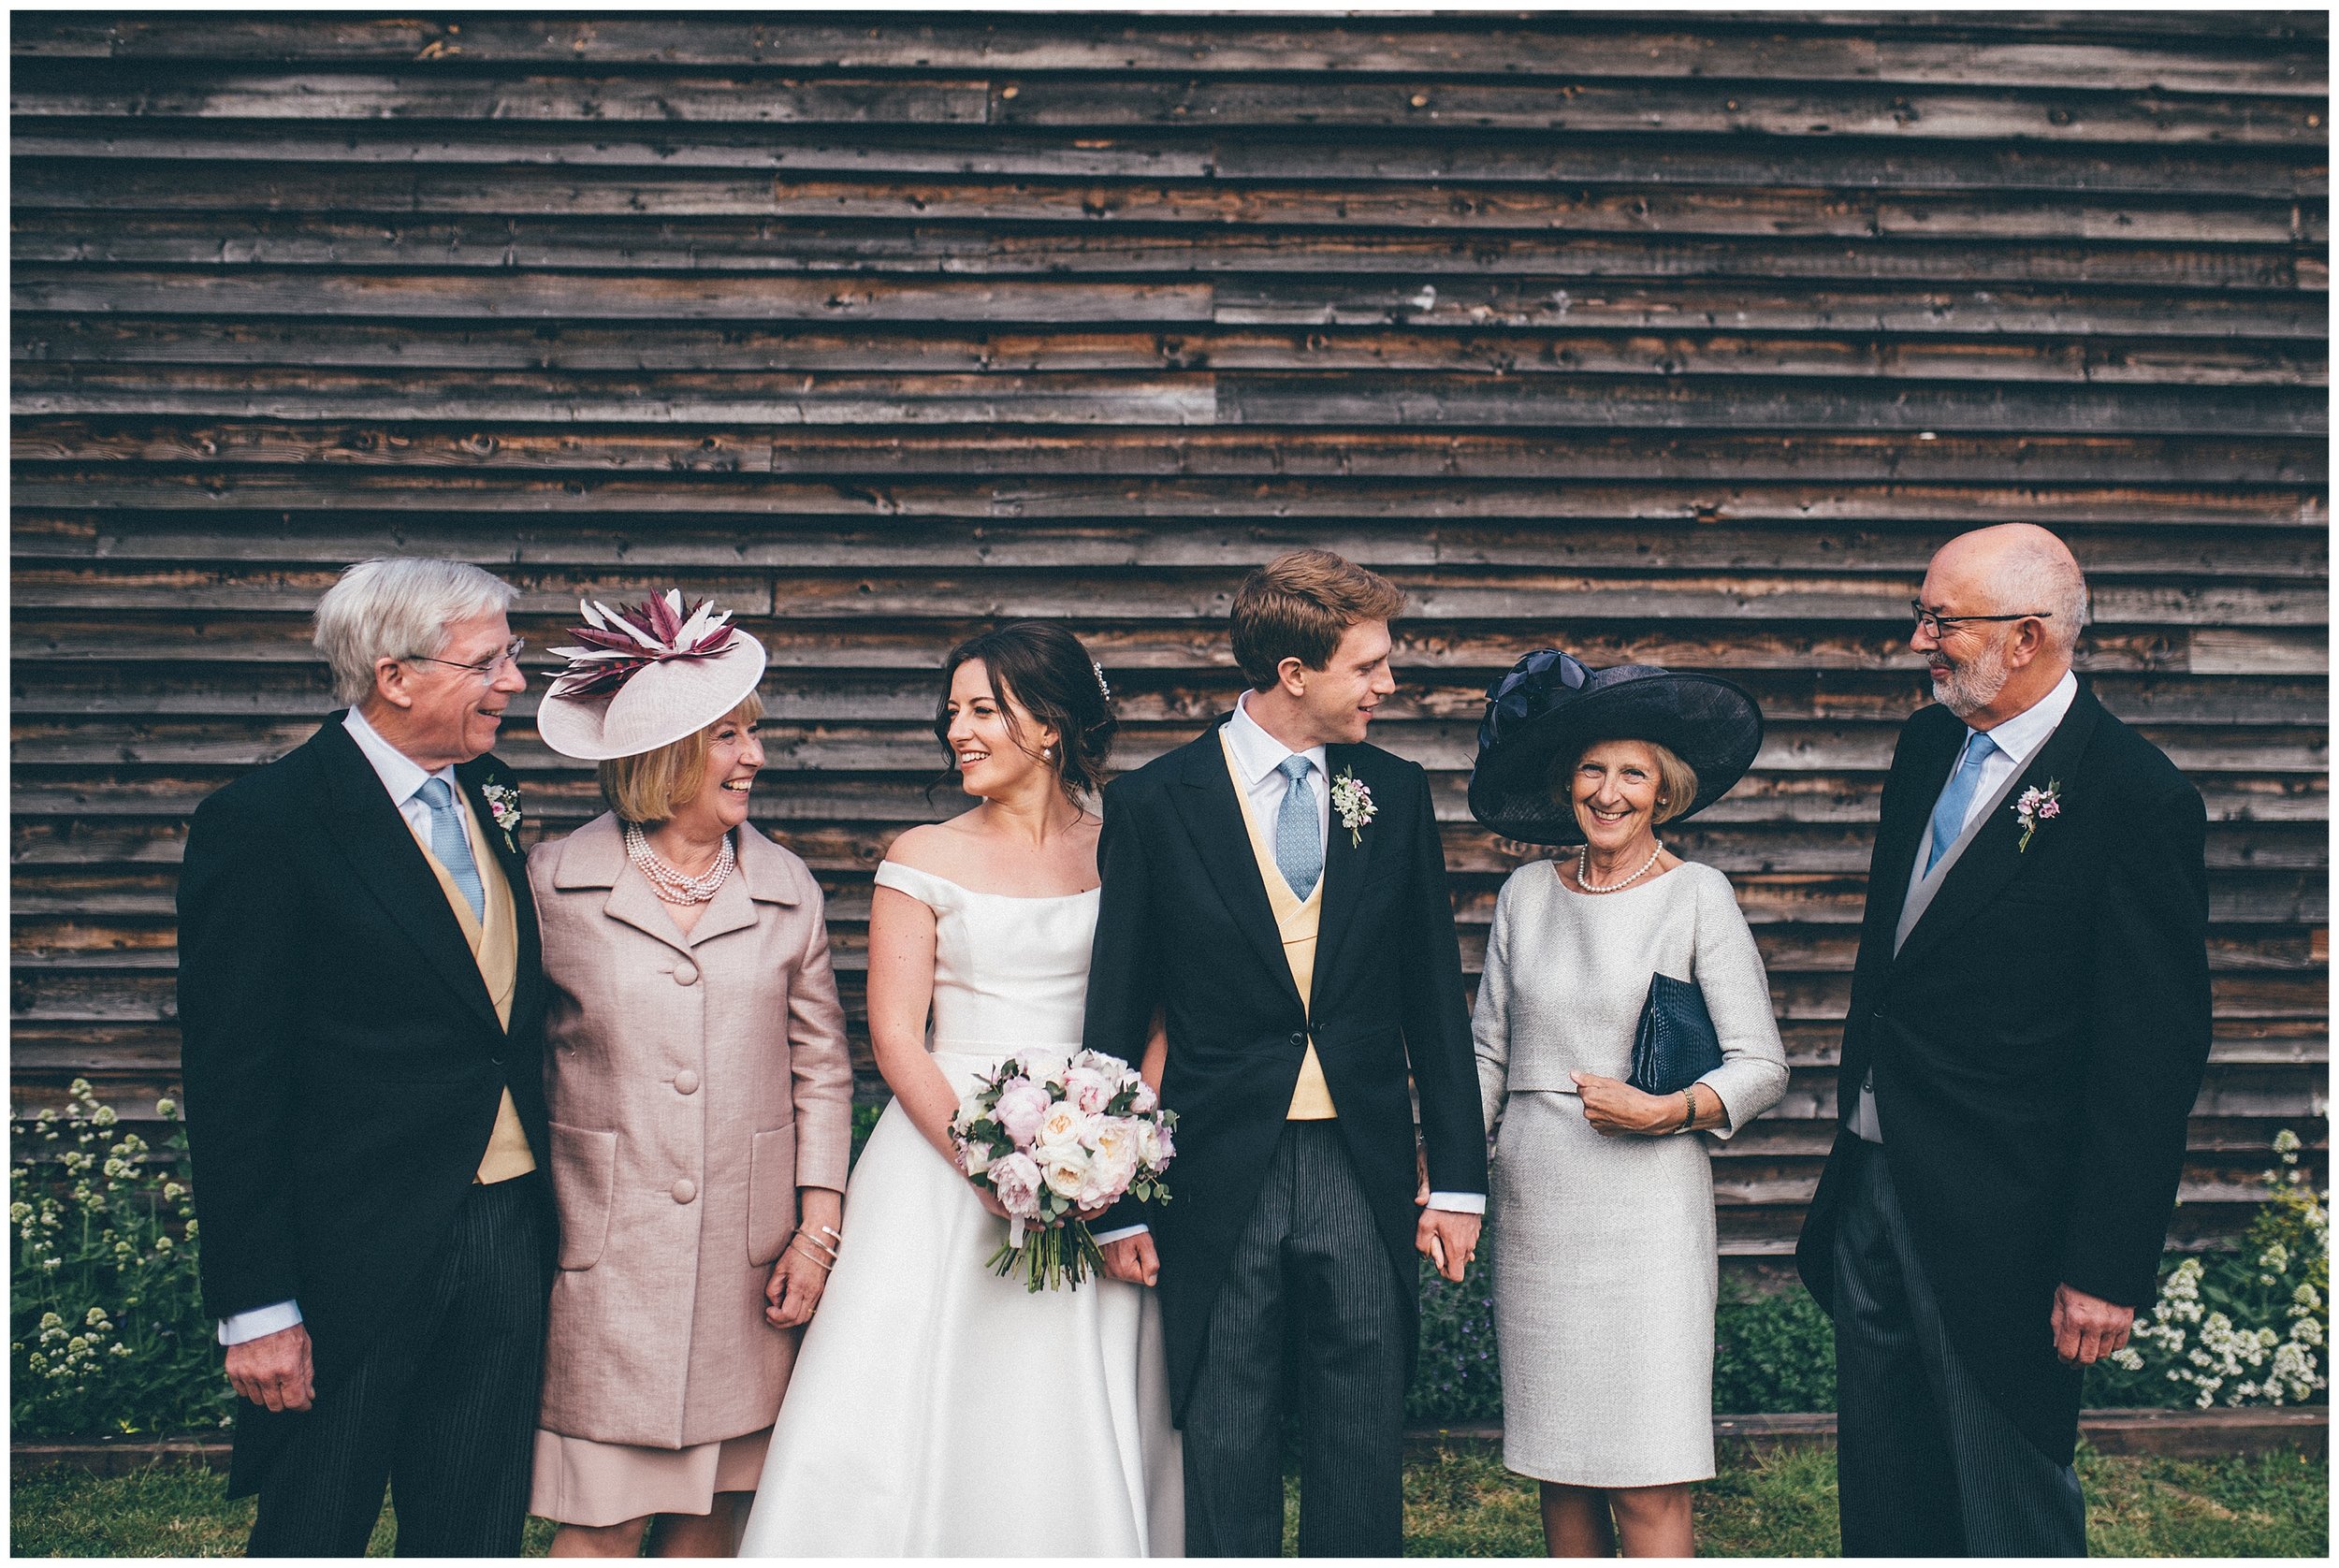 Family photograph at Henham Park wedding barns in Southwold.